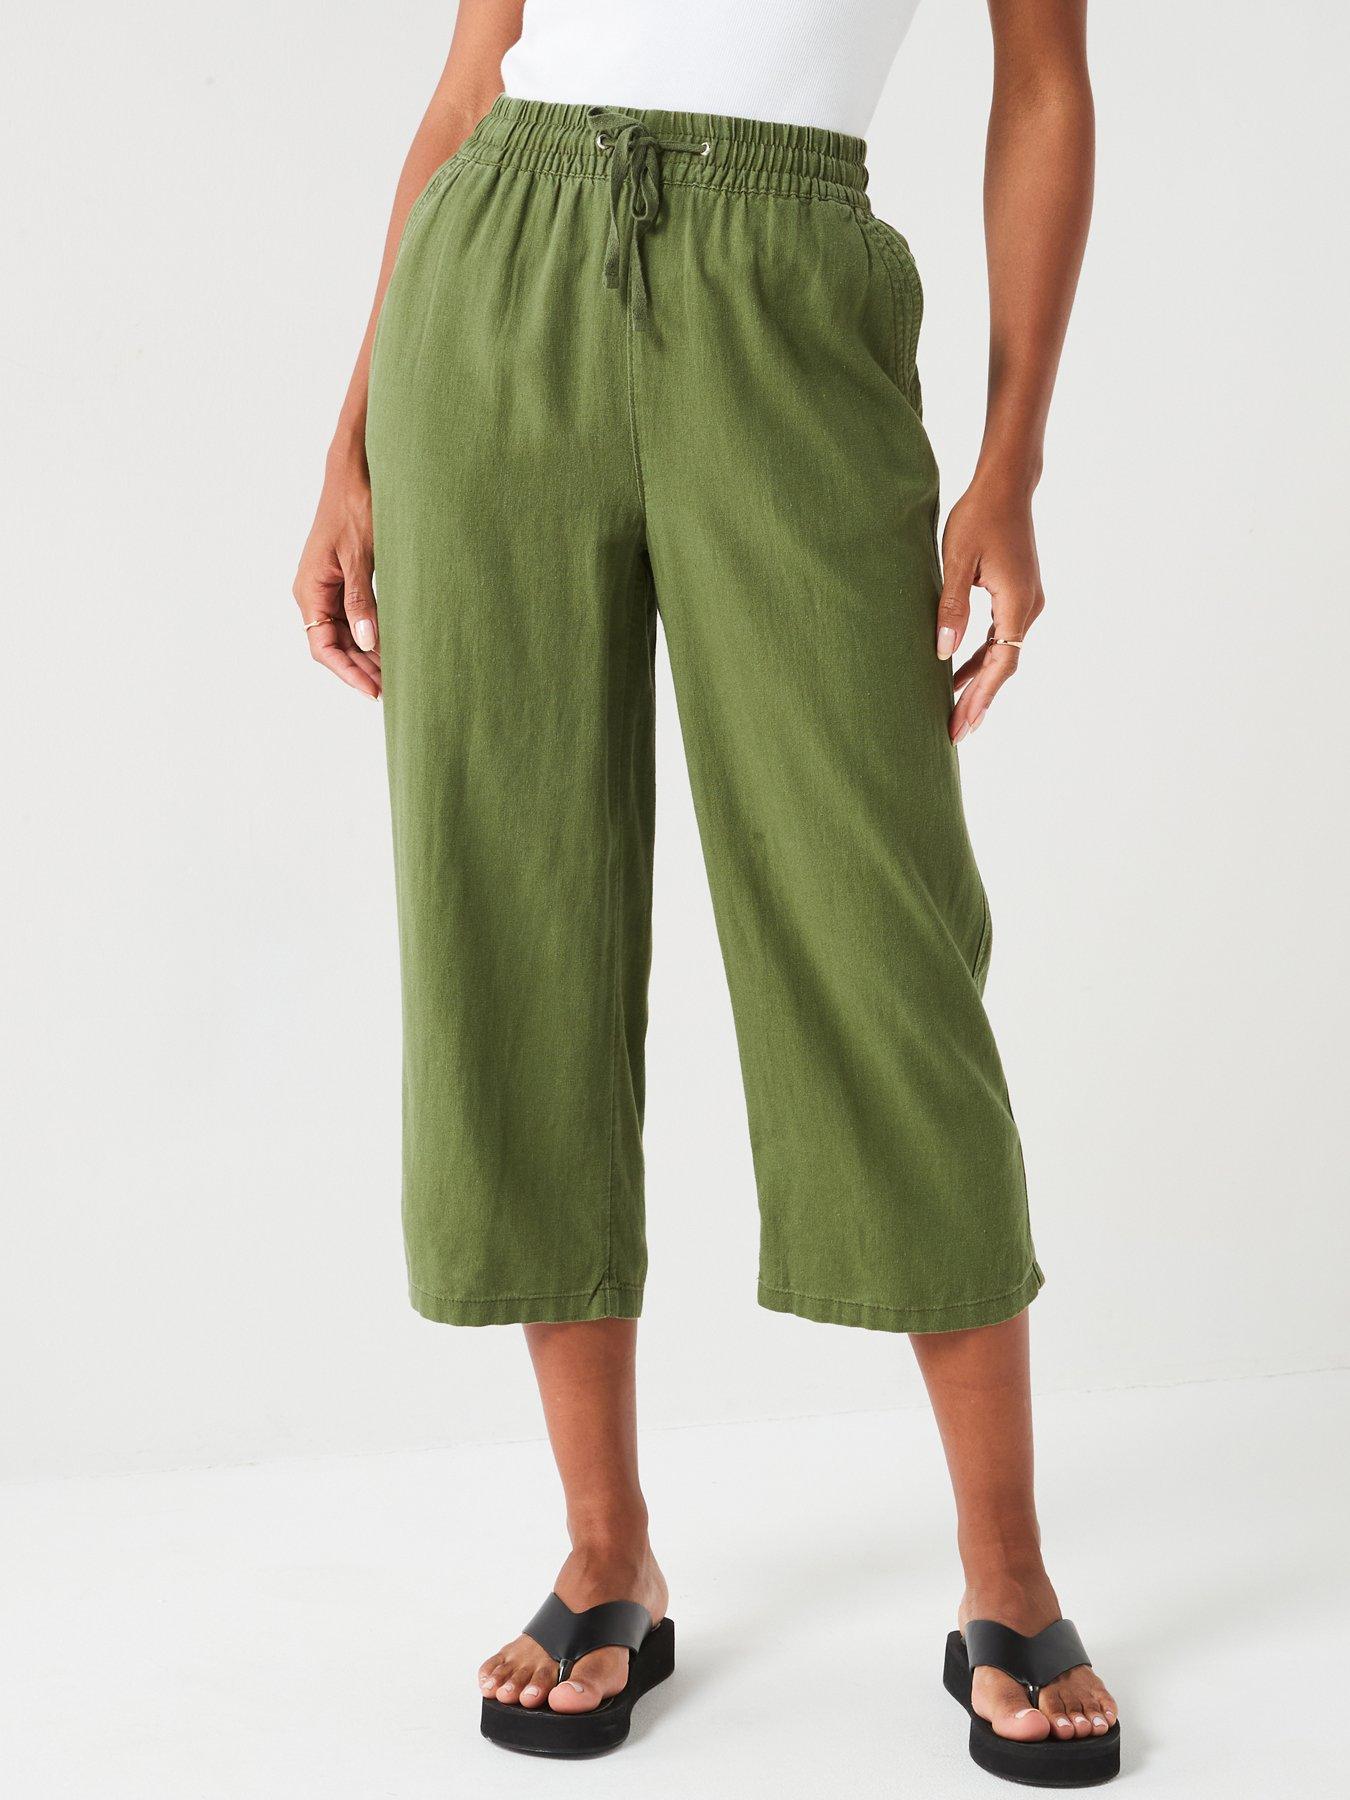 Adidas Mint Green Cropped Capri Track Pants Size Medium - $25